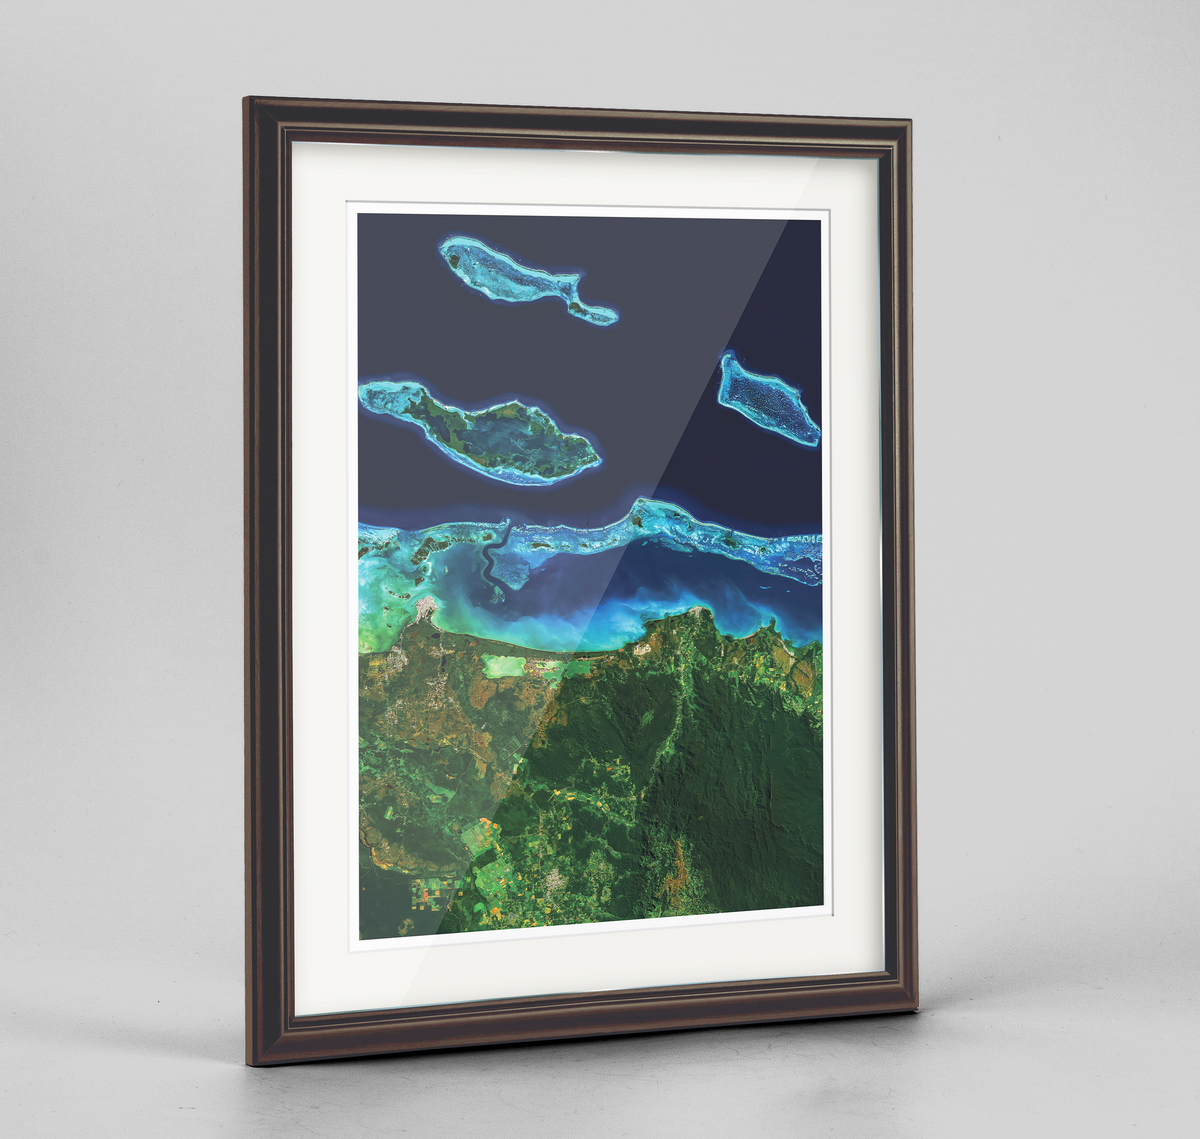 Belize Barrier Reef Earth Photography Art Print - Framed